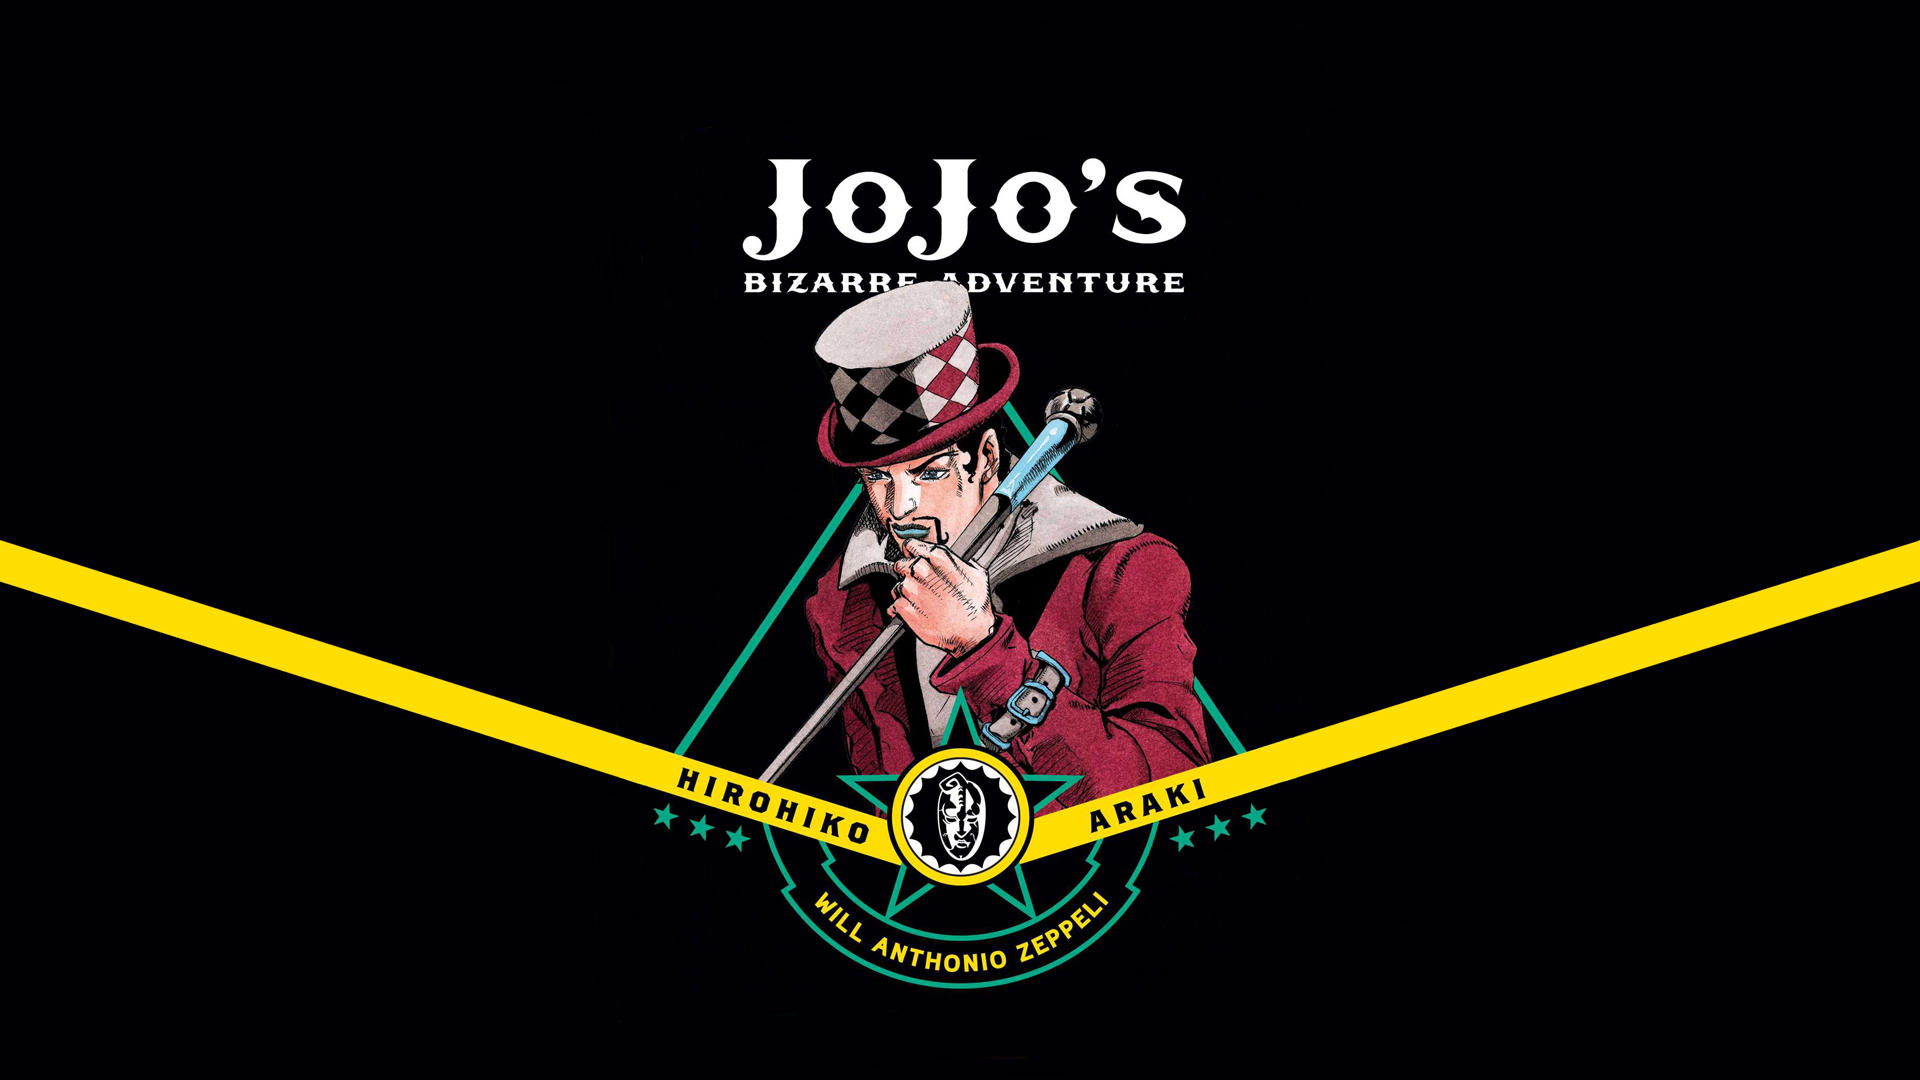 jojos wallpaper,helmet,fictional character,font,sports gear,logo